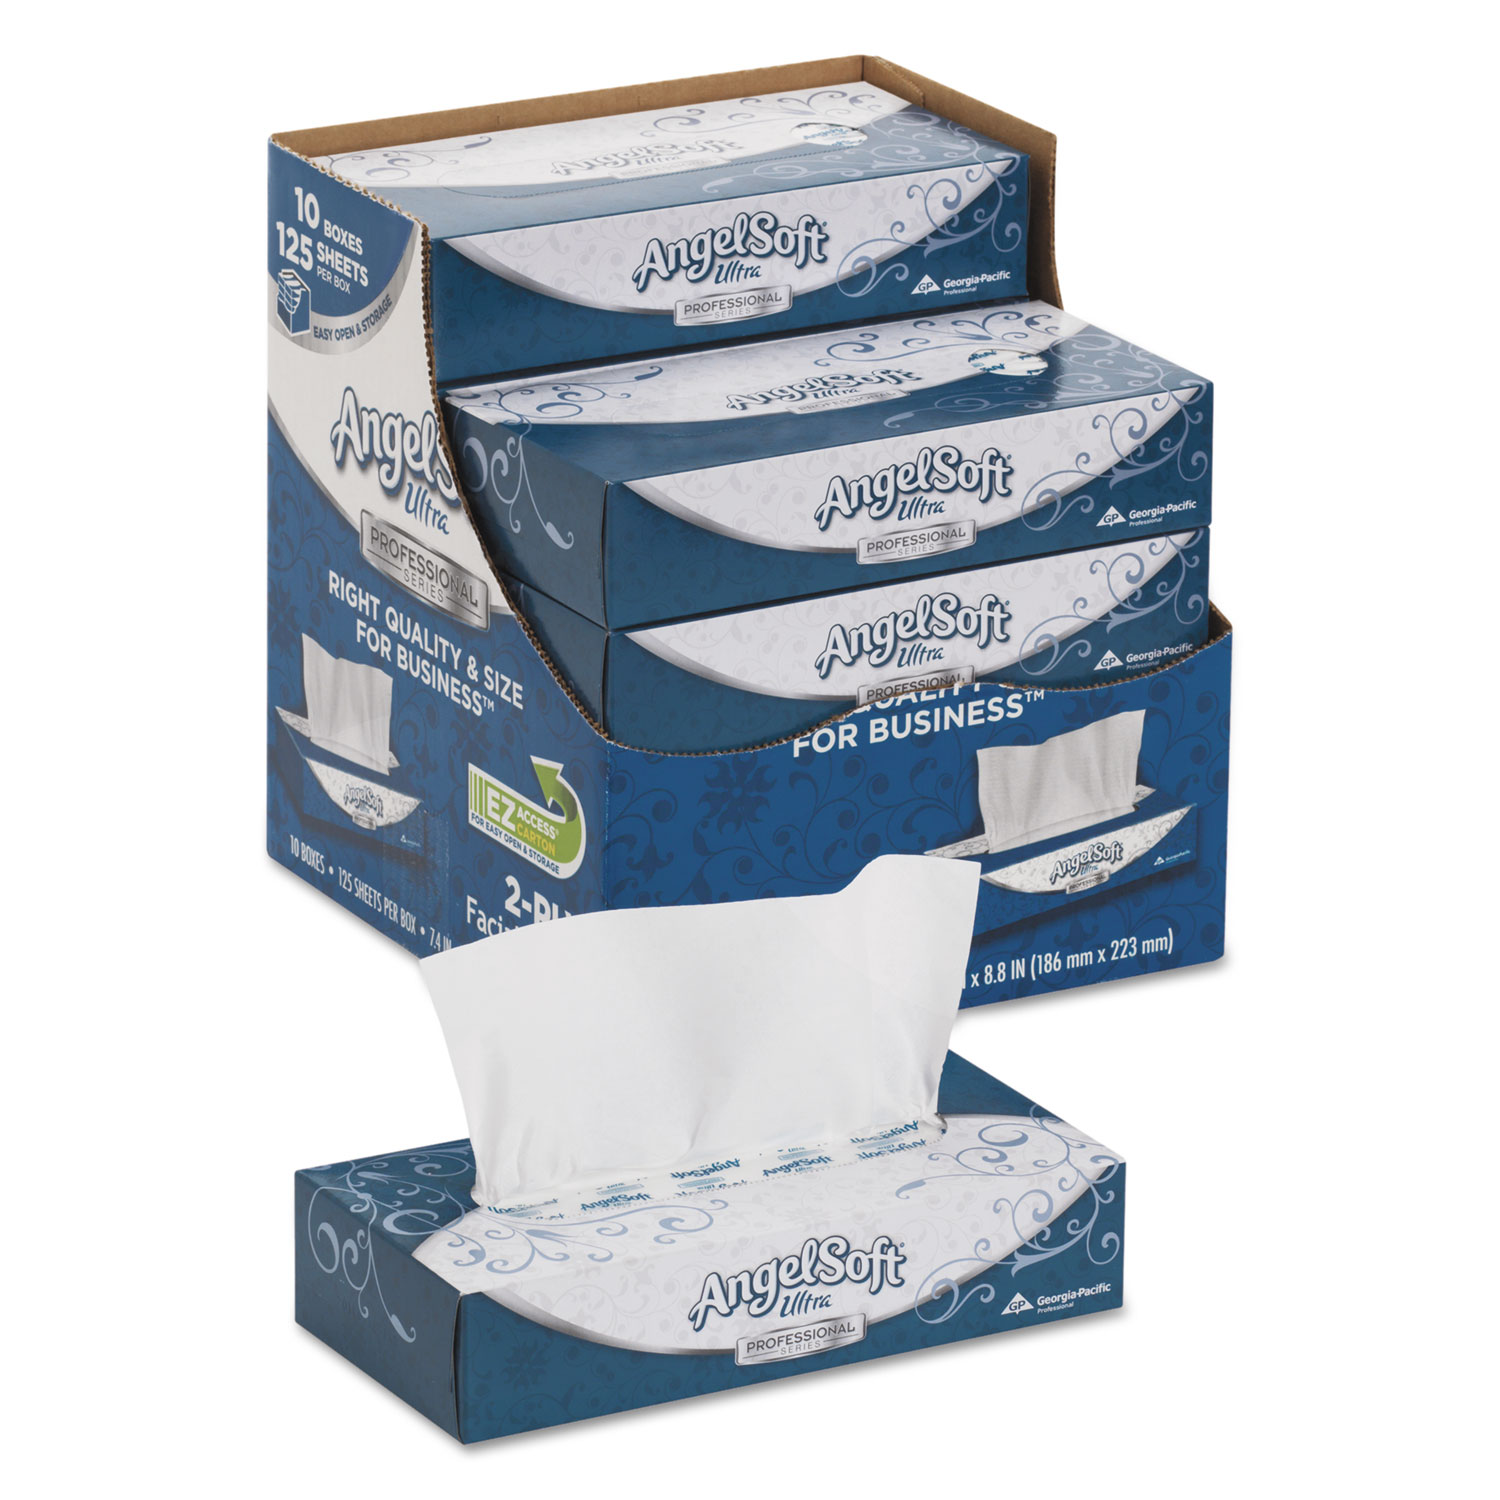  Angel Soft 4836014 ps Ultra Facial Tissue, 2-Ply, White, 125 Sheets/Box, 10 Boxes/Carton (GPC4836014) 